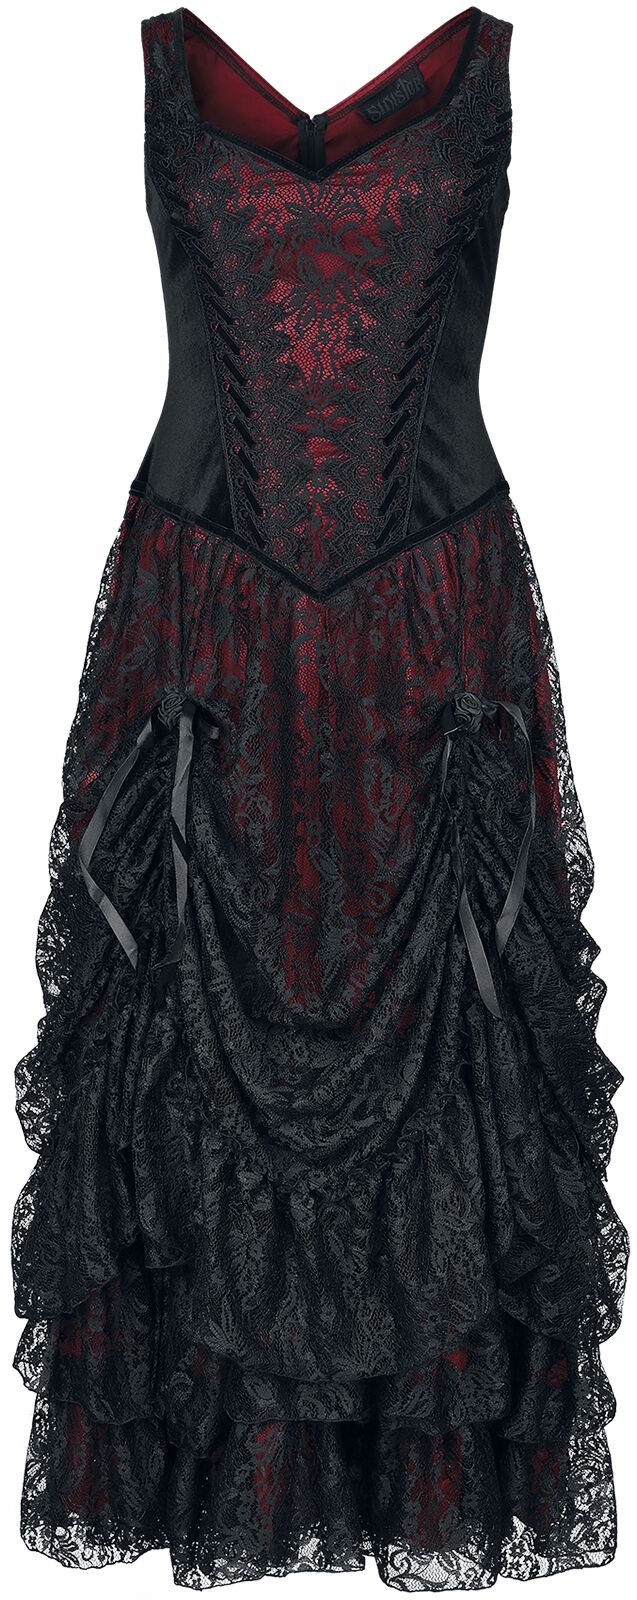 Sinister Gothic Longdress Langes Kleid schwarz rot in M